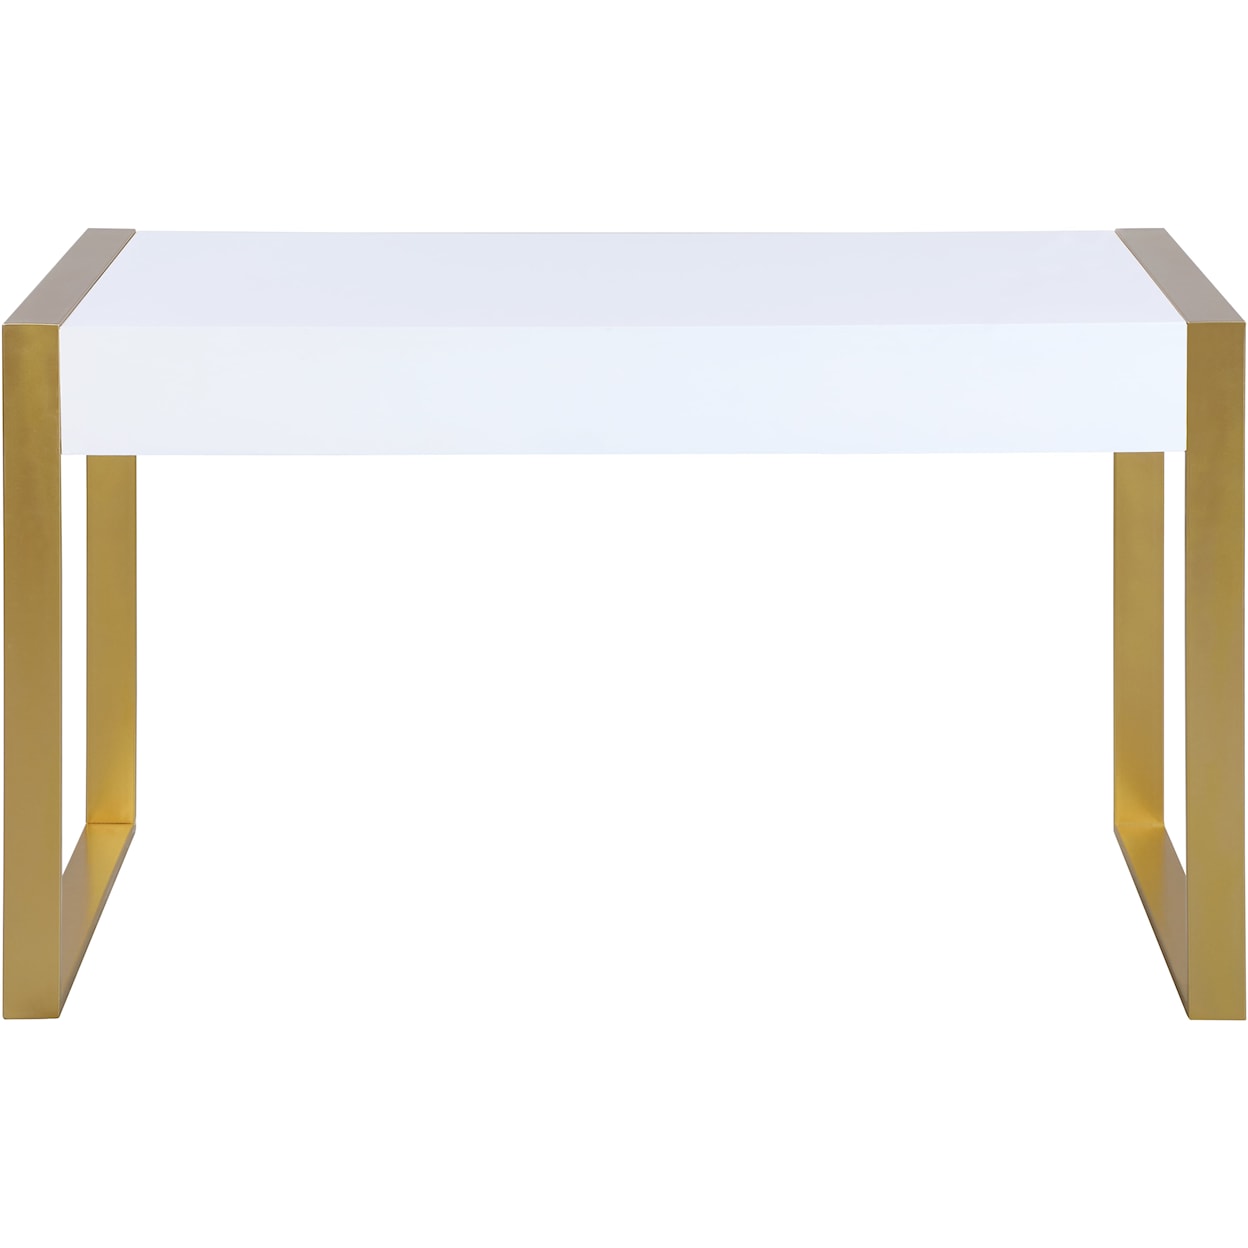 Meridian Furniture Victoria 2-Drawer Desk